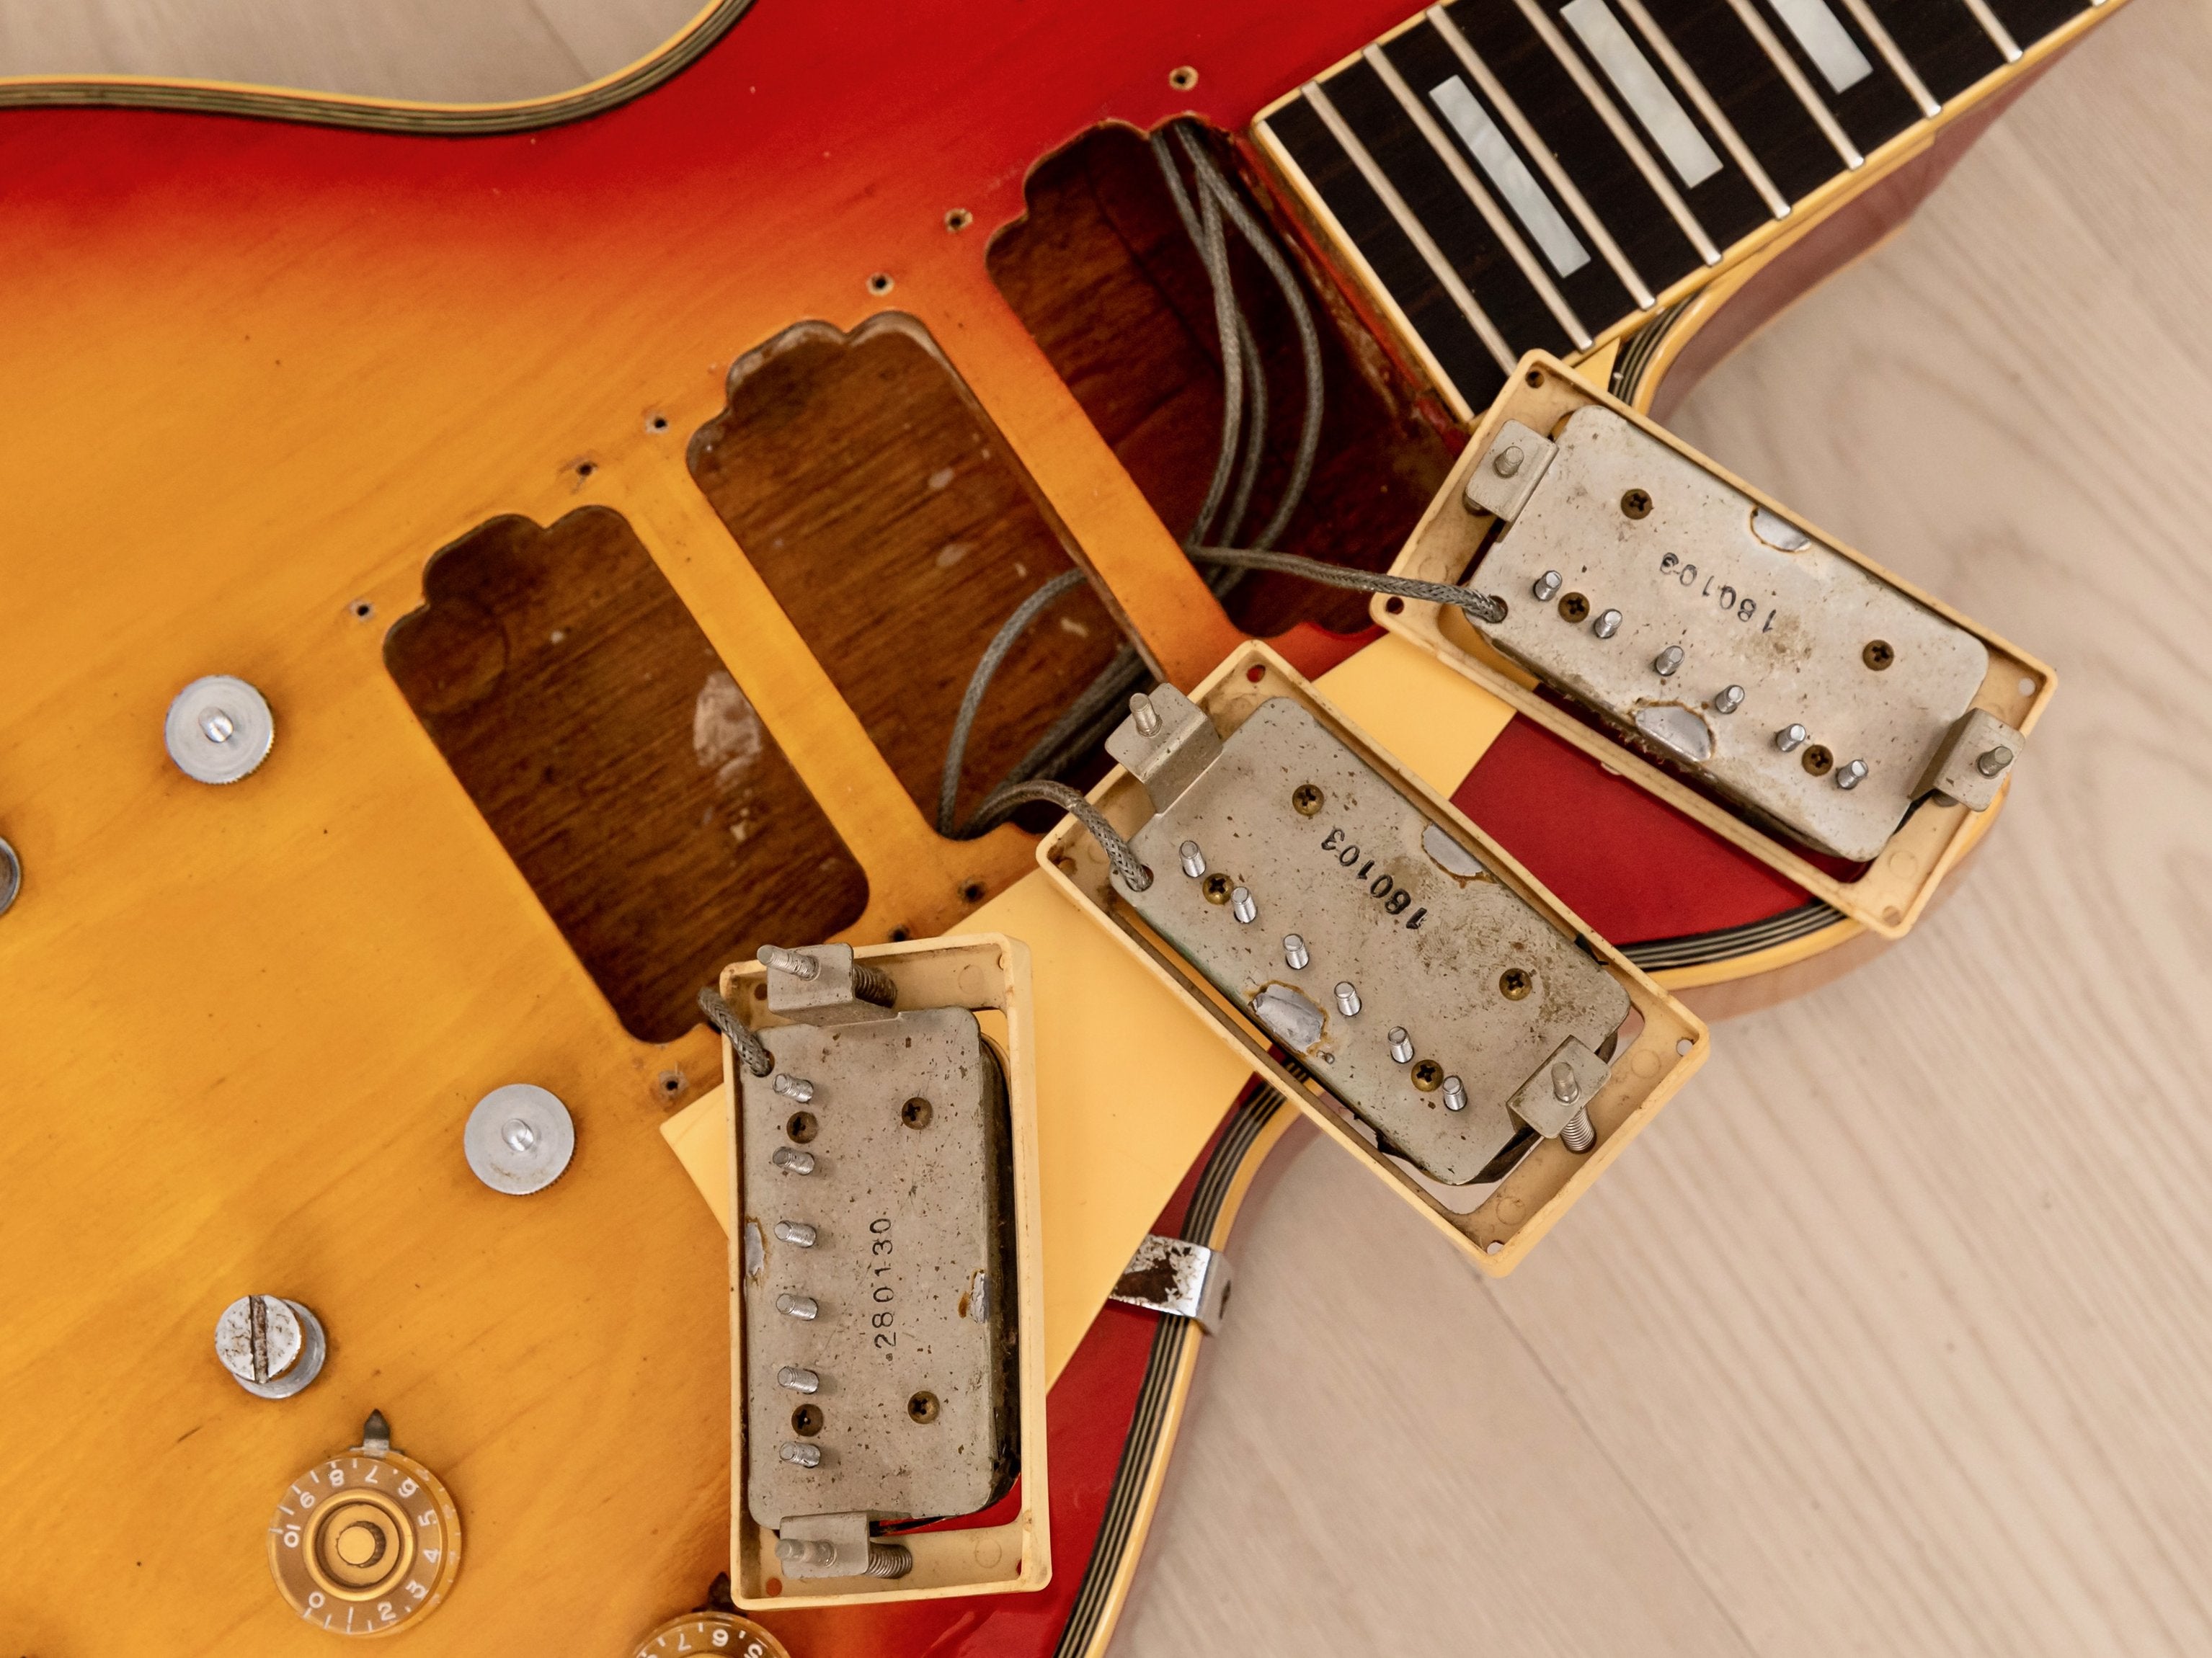 1978 Greco EG600 Custom Triple Pickup Vintage Electric Guitar w/ Maxon PAFs, Japan, Ace Frehley